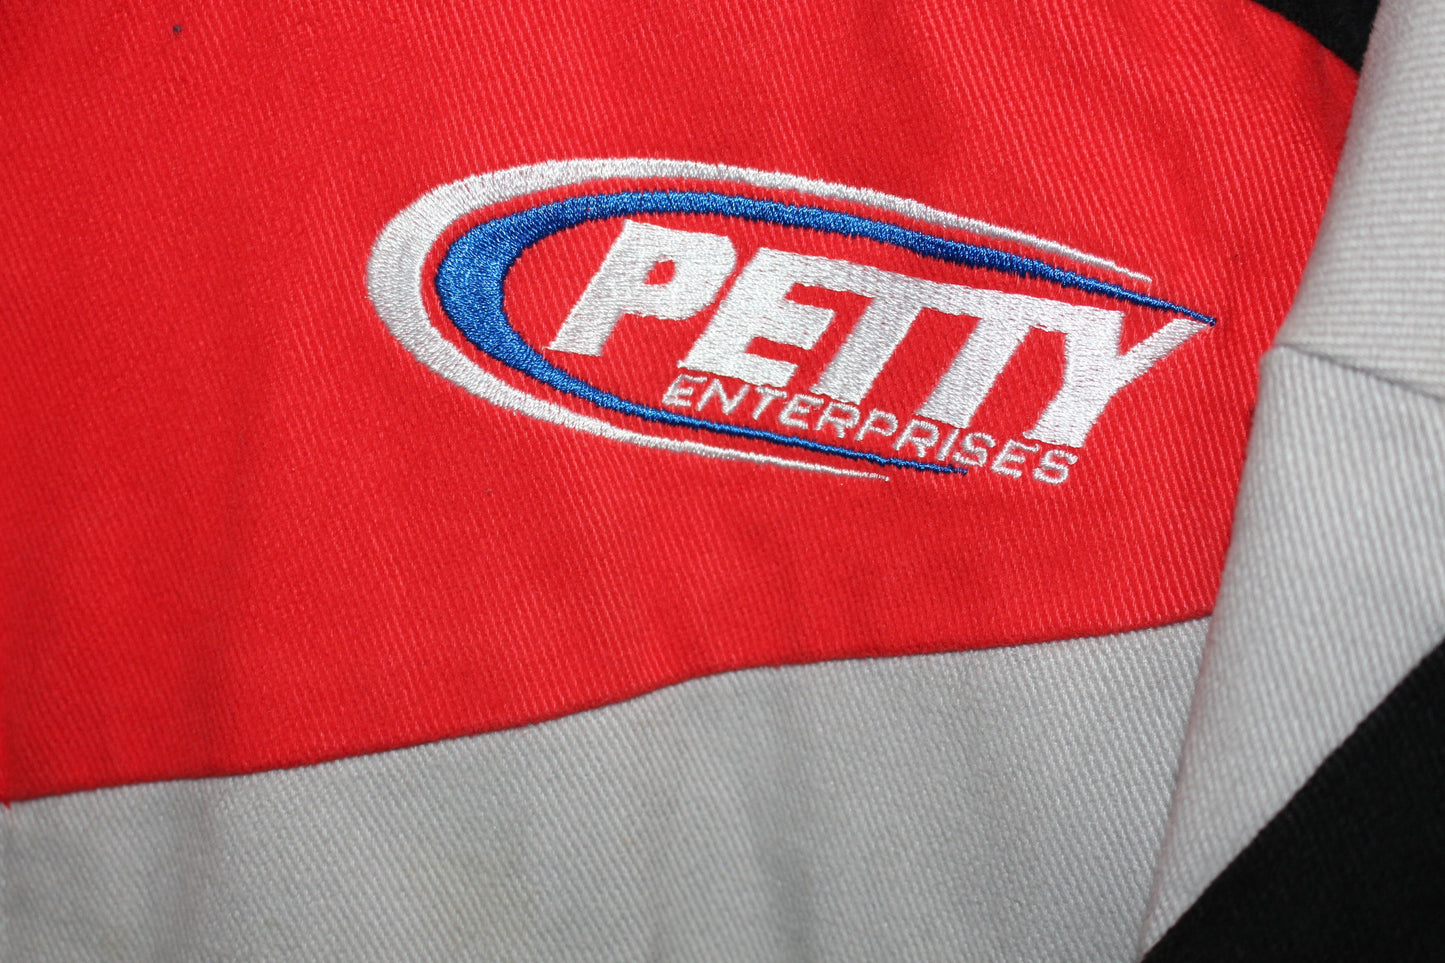 Sprint Racing NASCAR Kyle Petty #45 (M)